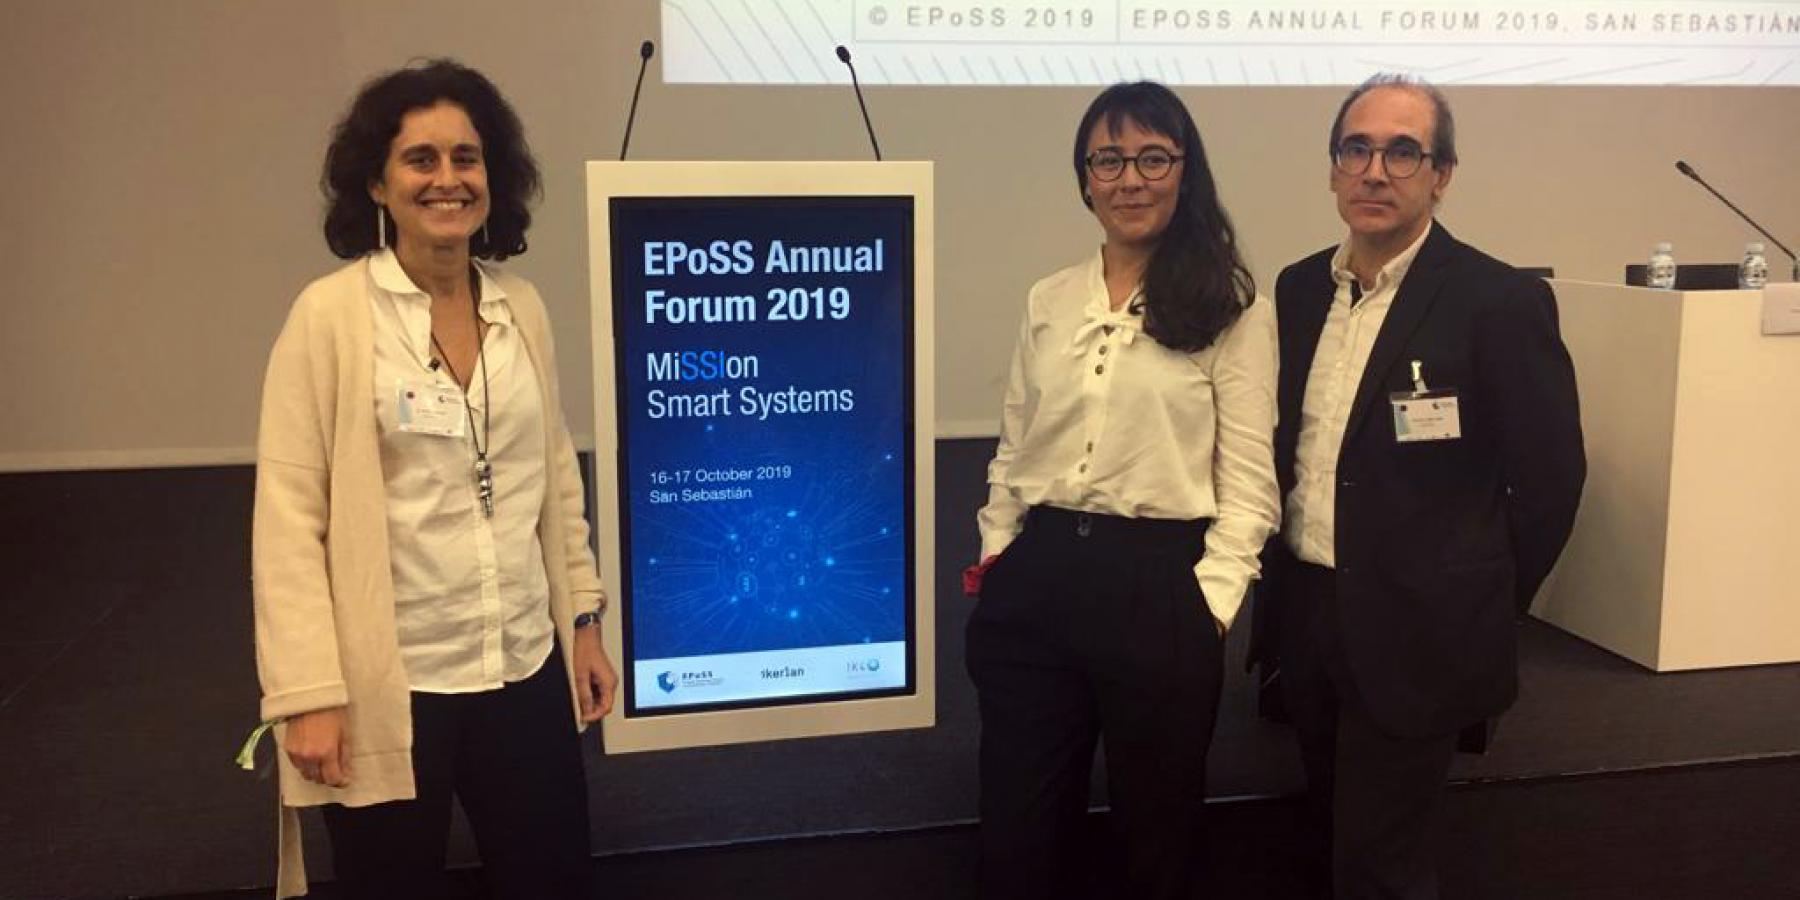 nstitut de Microelectrònica de Barcelona to the EPoSS Annual Forum